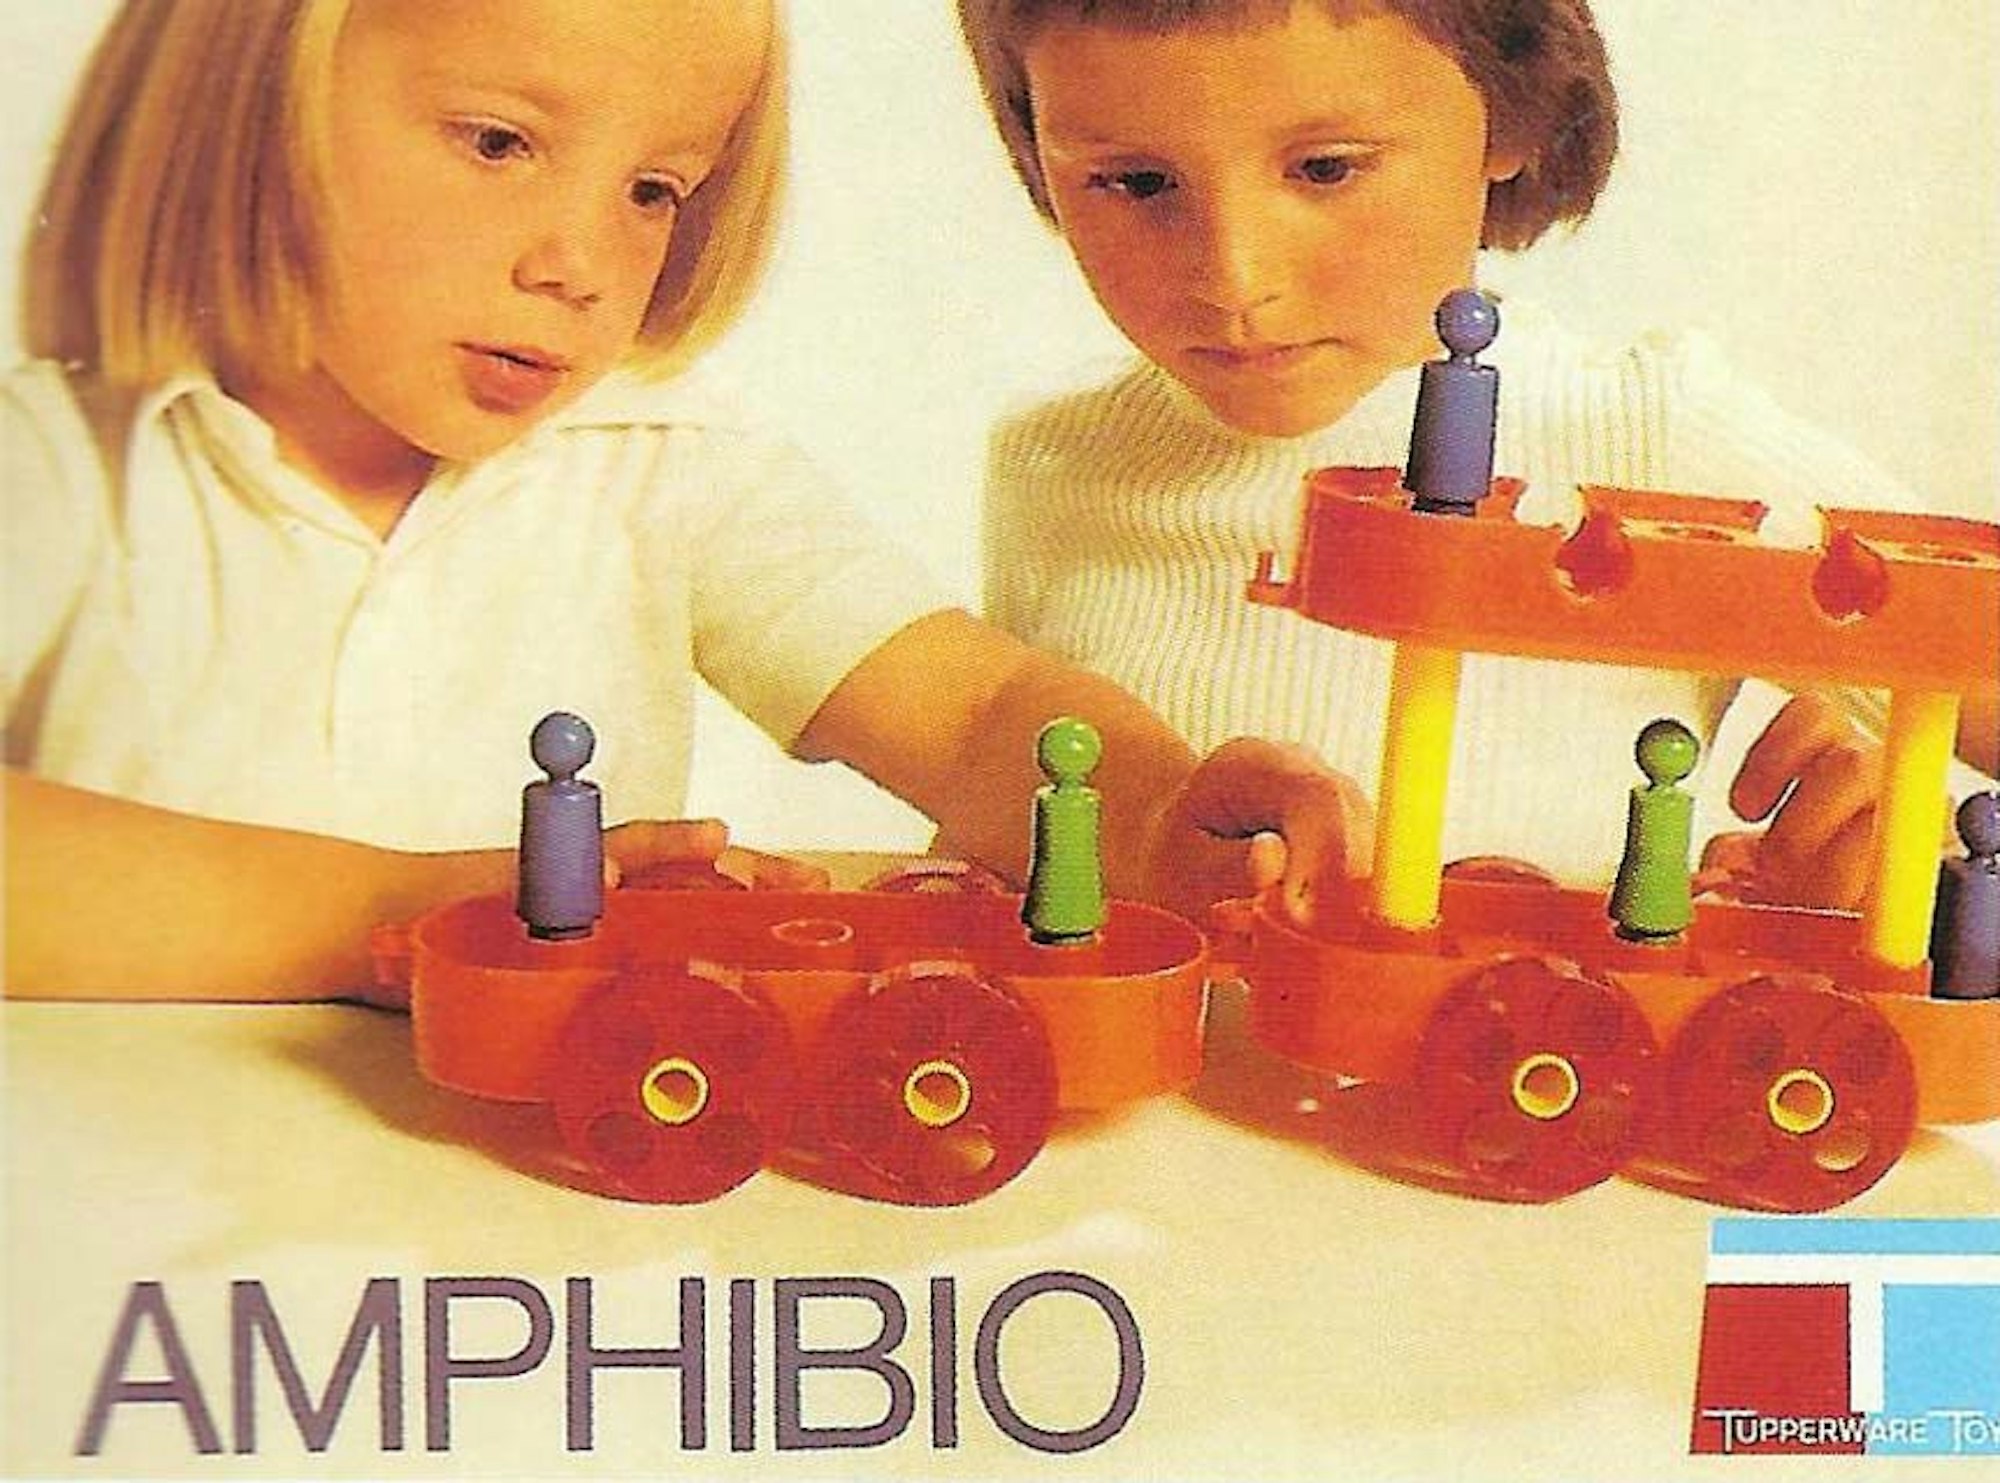 Amphibio Toy (Bob Daenen & Product Development Group Tupperware)